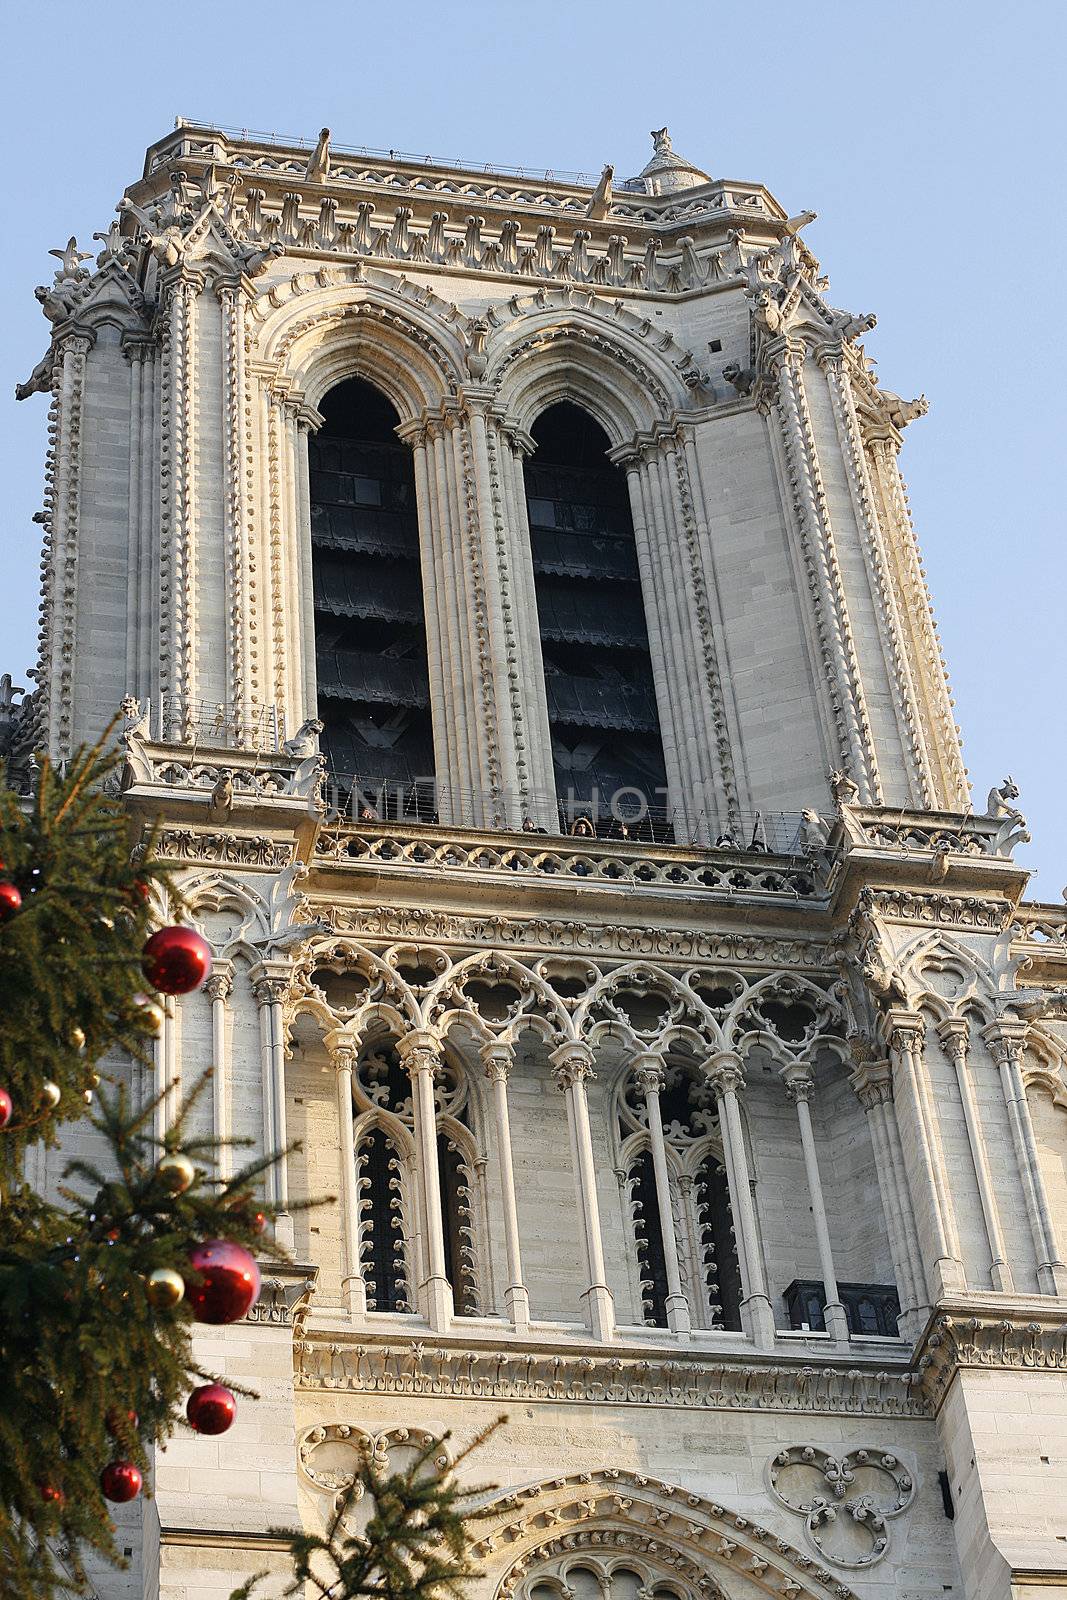 The Notre dame in Paris, France